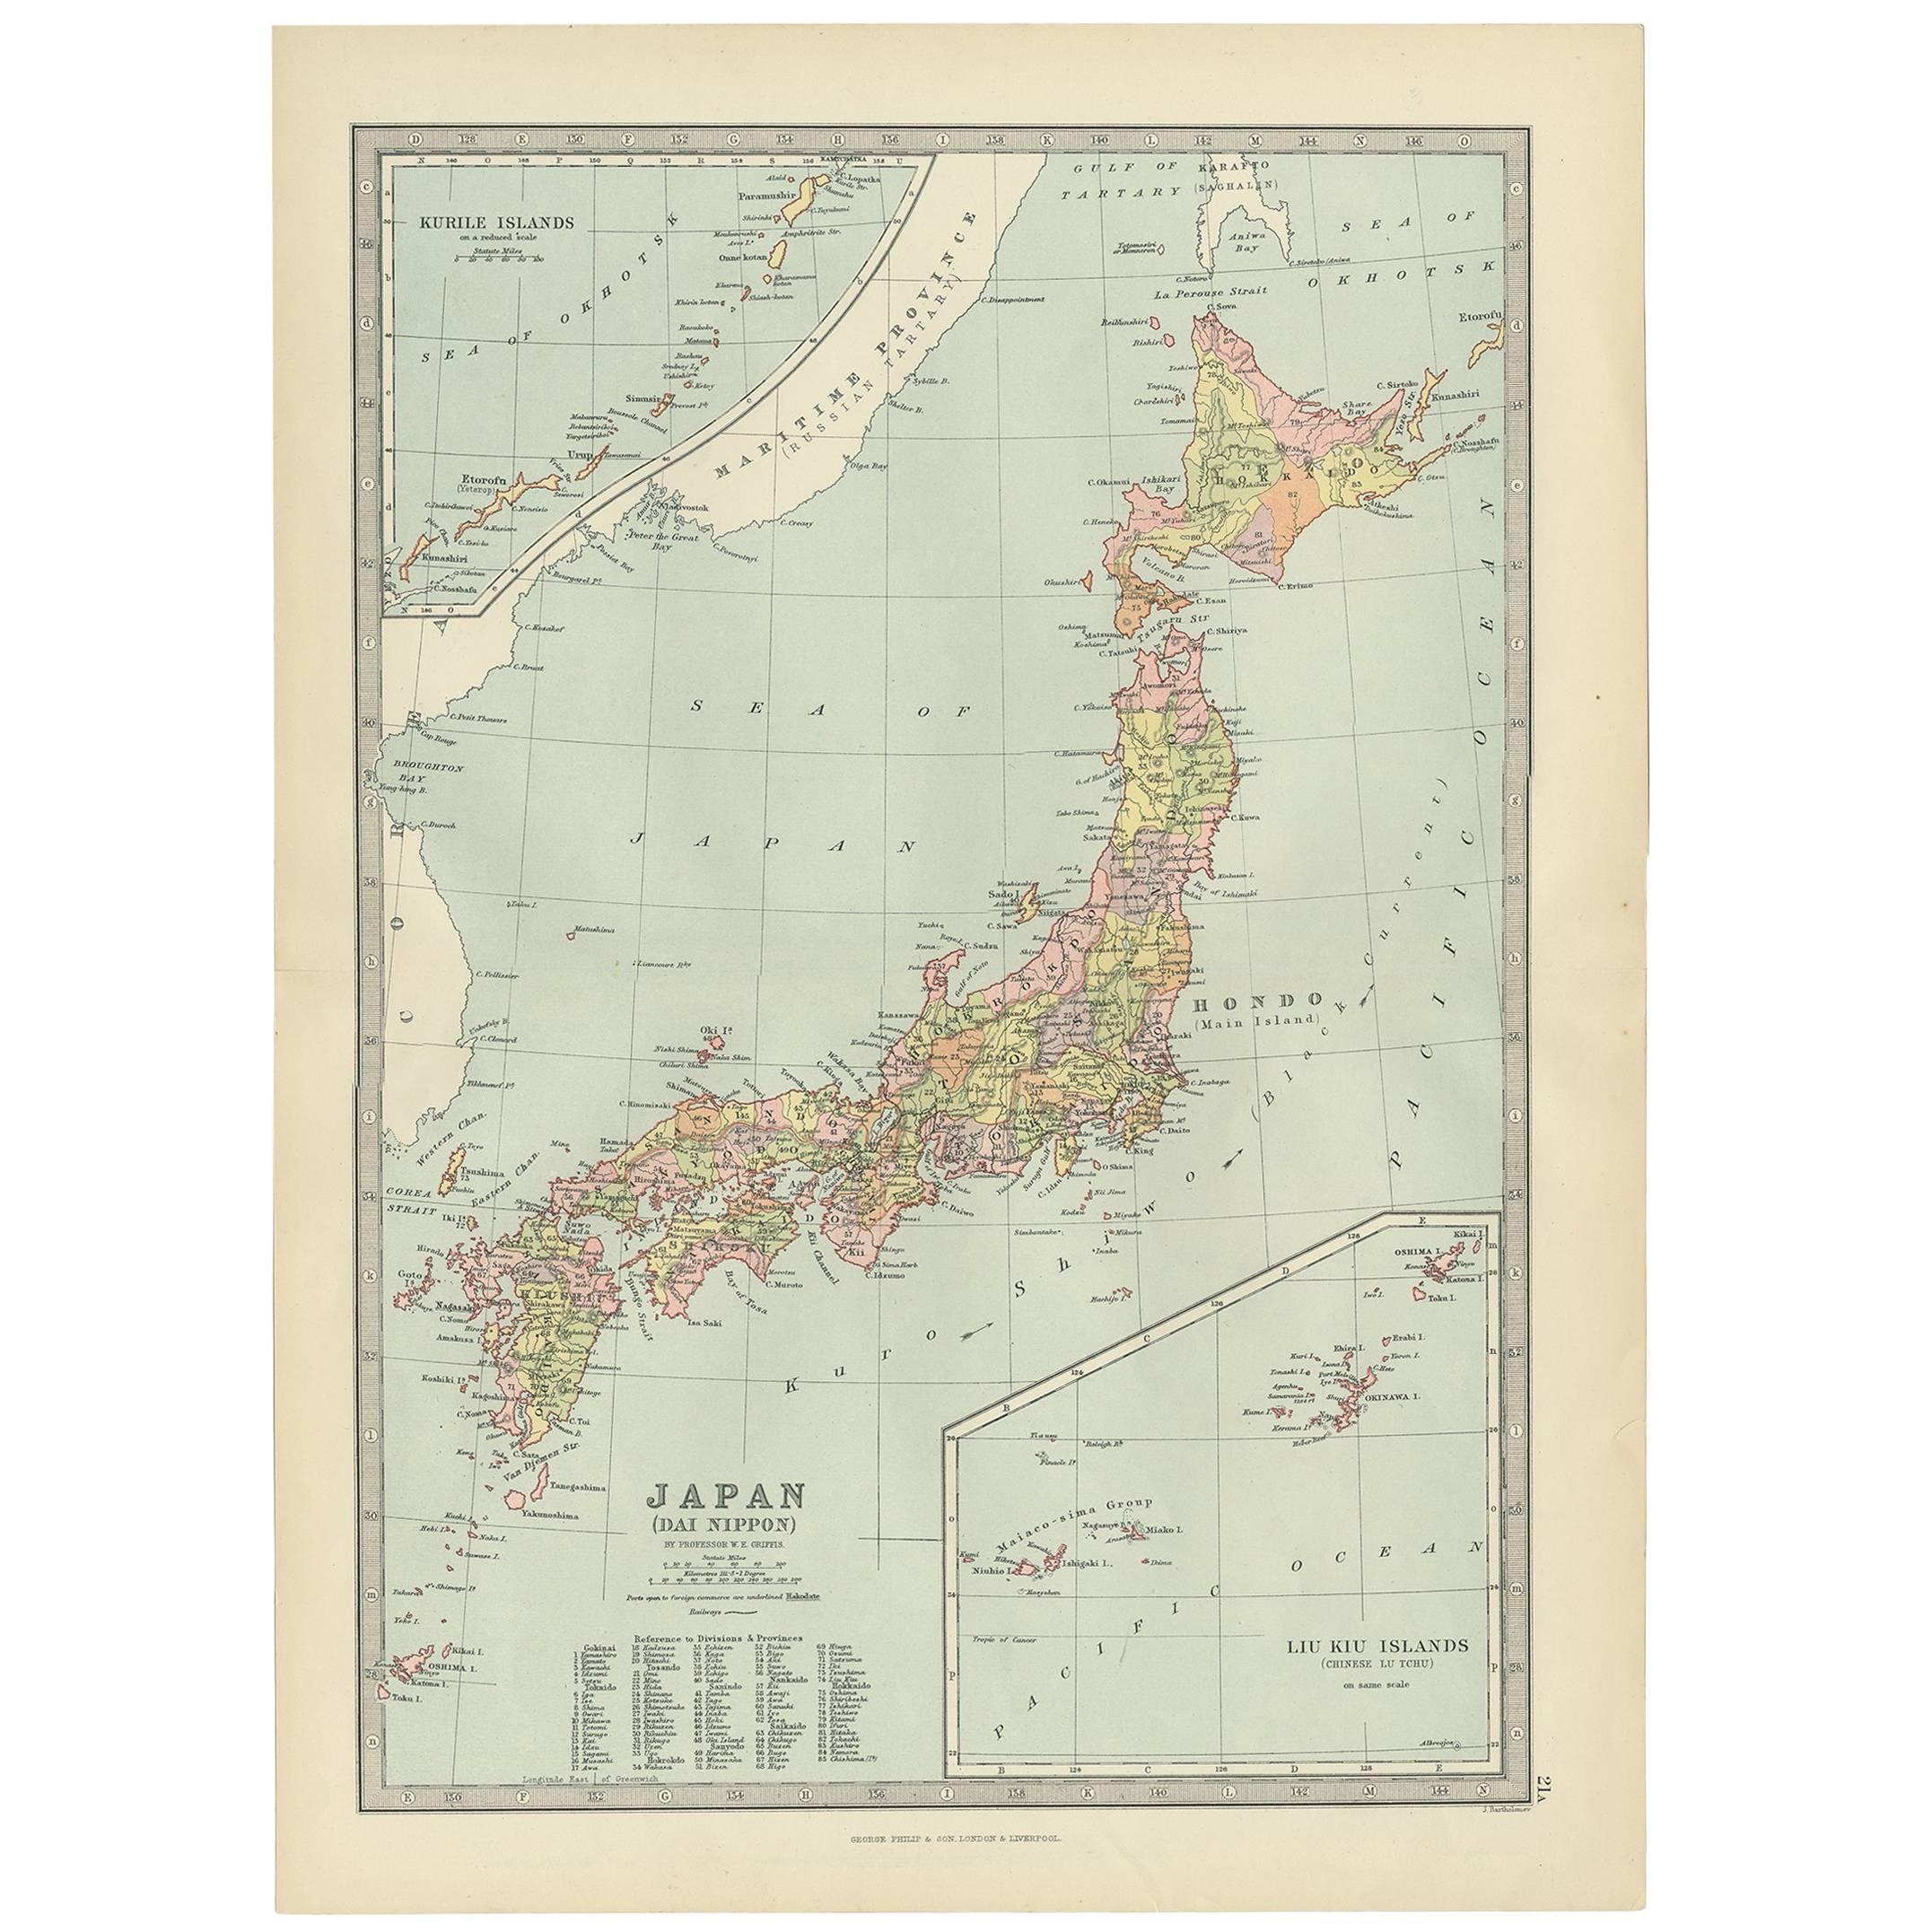 Antique Map of Japan, the Kurile Islands and Liu Kiu Islands, 1886